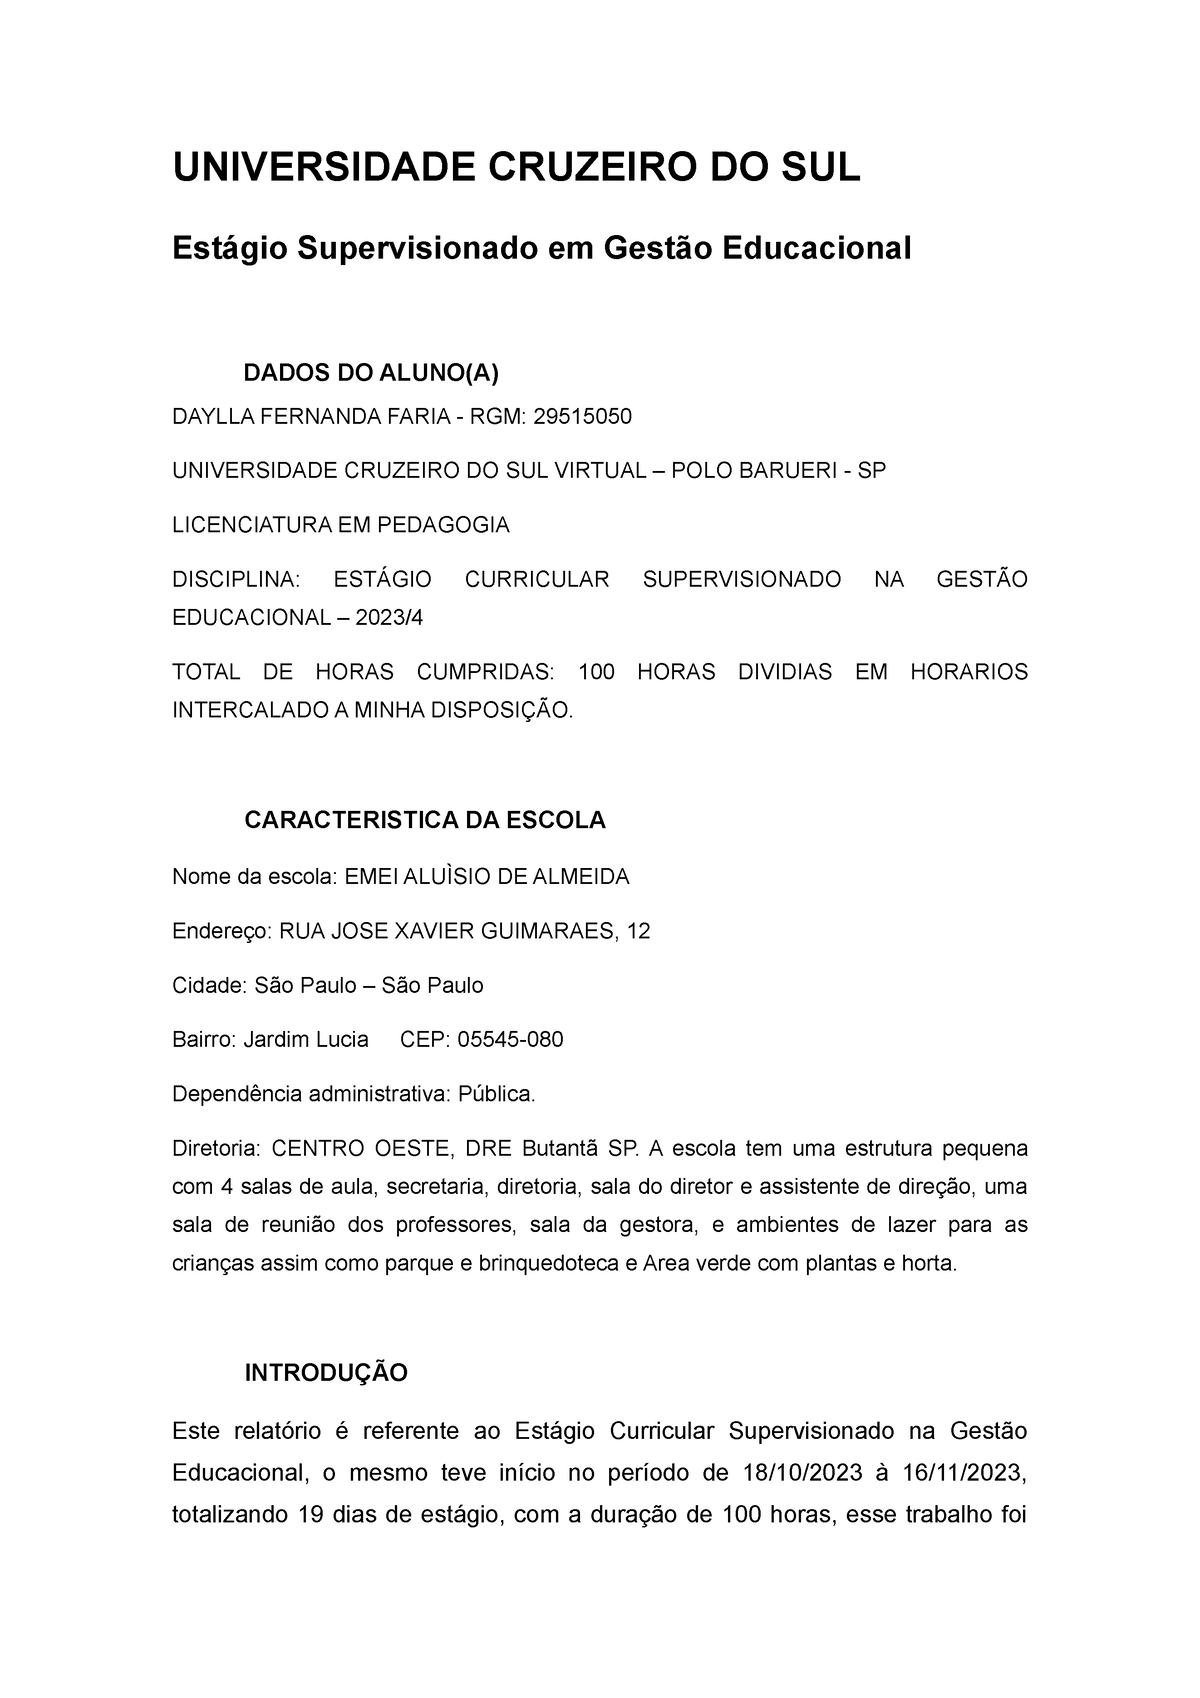 Relatório Estágio - Daylla Fernada Faria EMEI Aluisio - 1) DADOS DO  ESTUDANTE/CURSO Curso: Pedagogia - Studocu